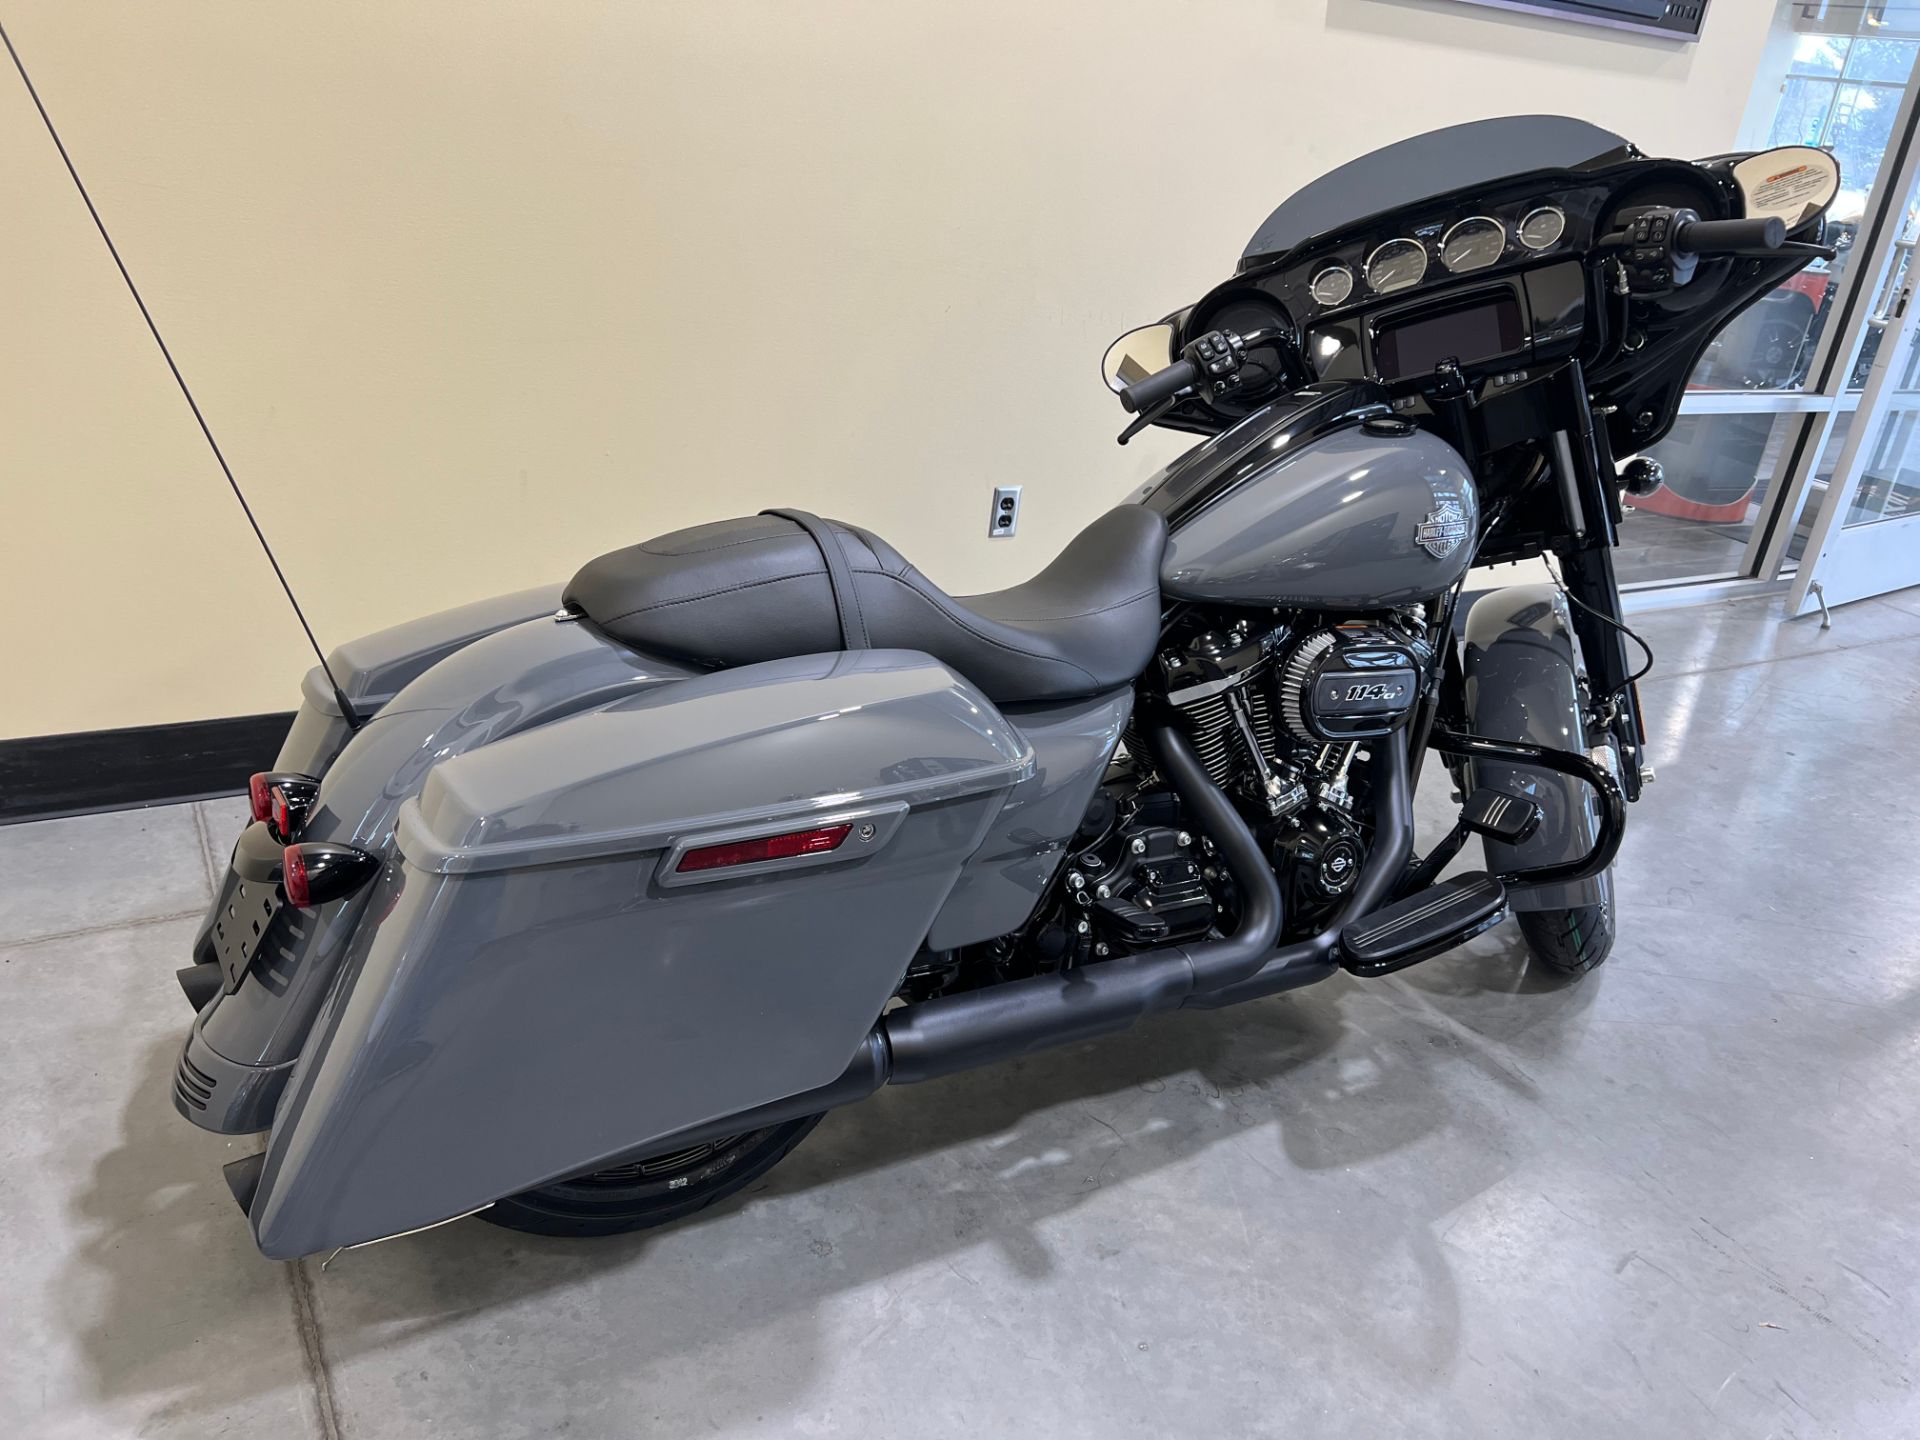 2022 Harley-Davidson Street Glide® Special in Logan, Utah - Photo 3